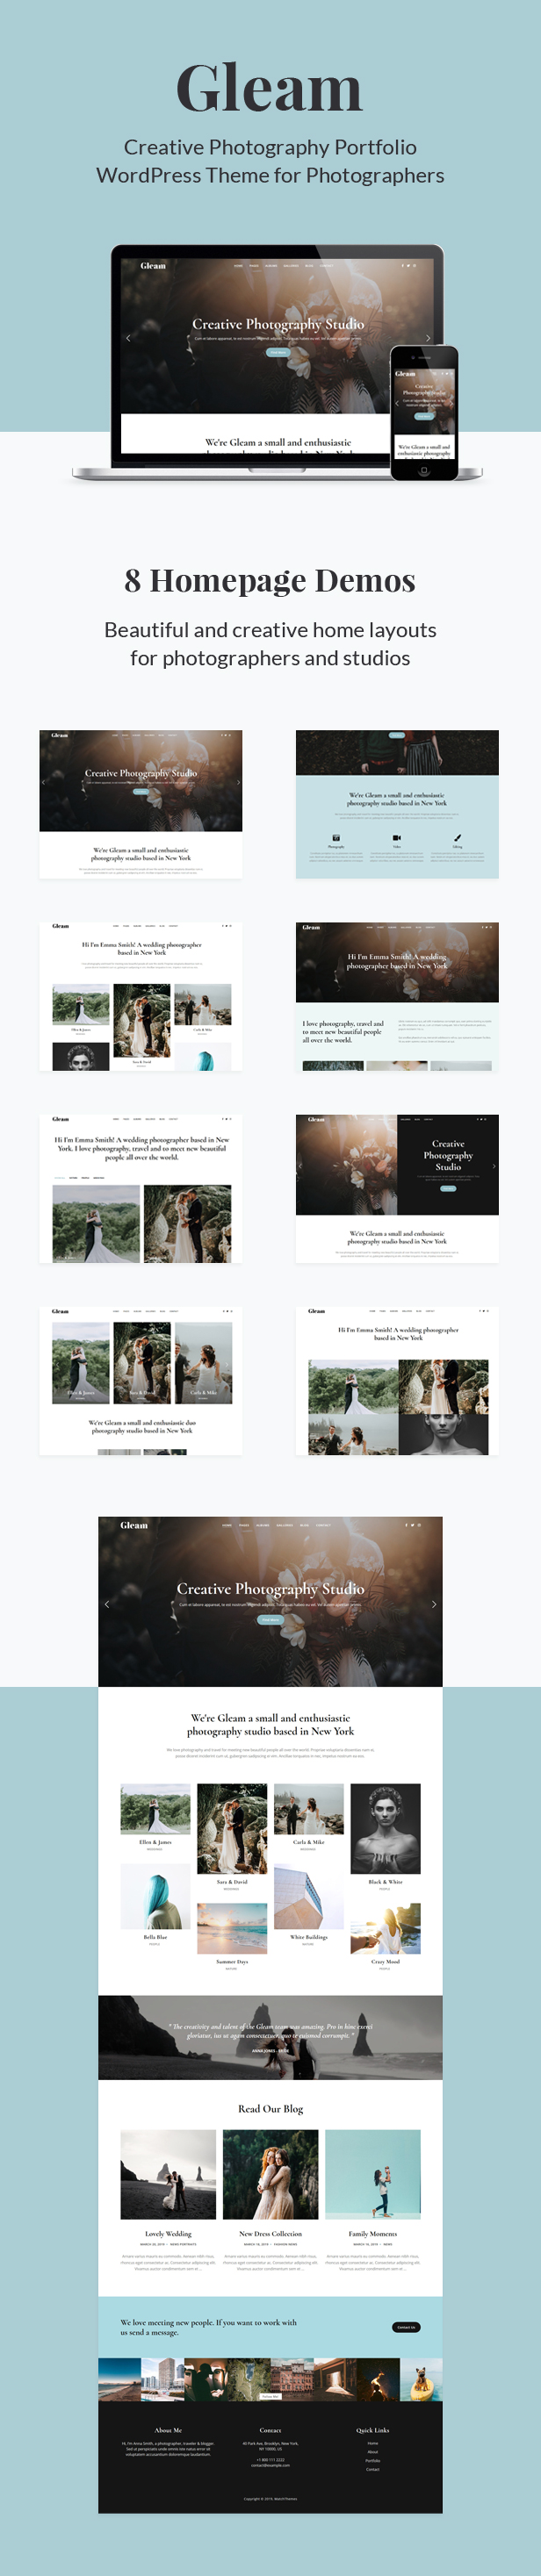 Gleam - Portfolio Photography WordPress Theme - 1